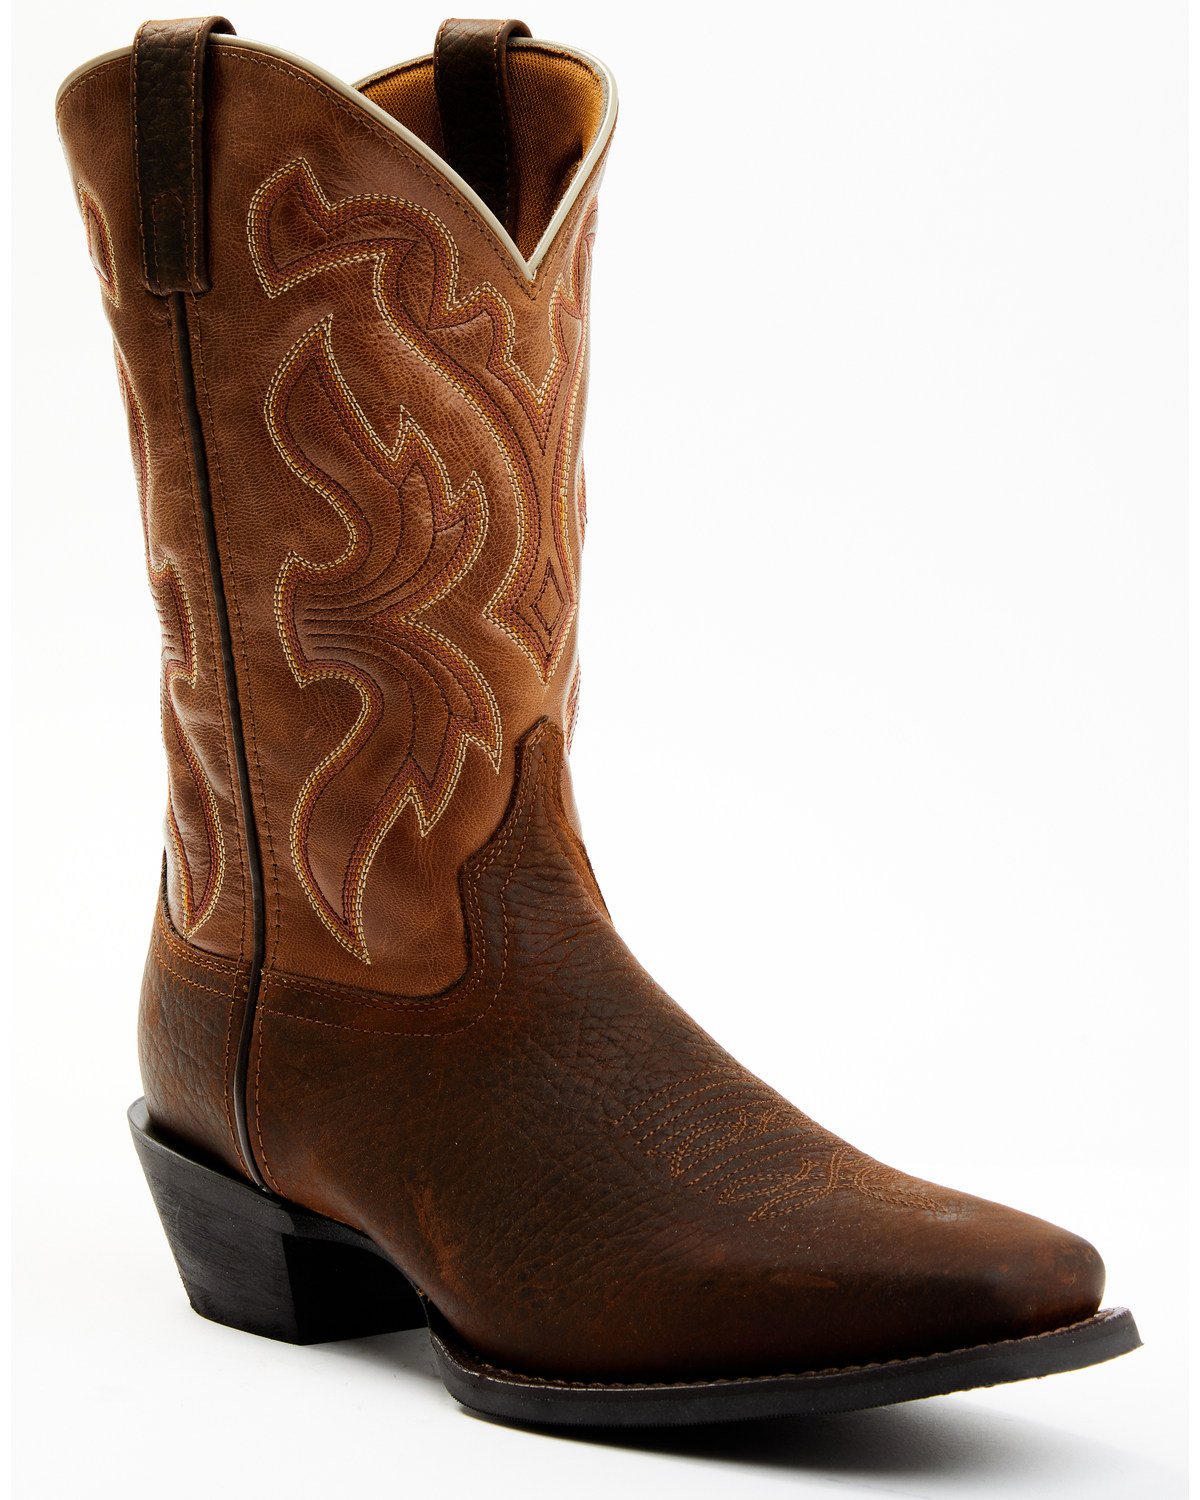 Laredo Men's Mckinney Western Boots - Square Toe